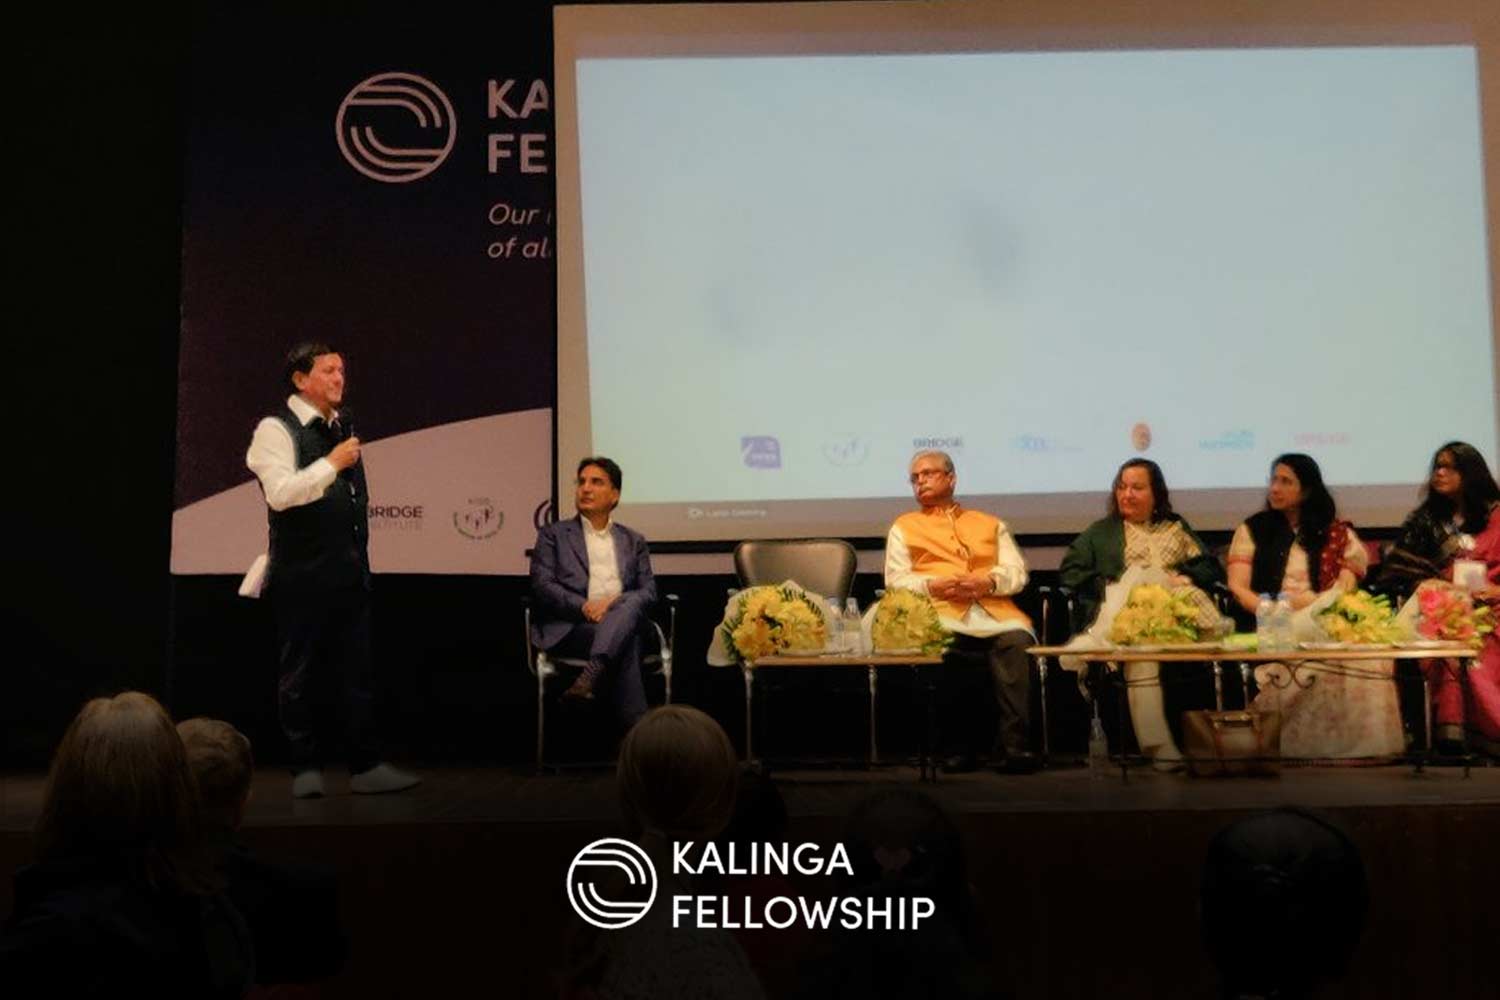 Kalinga Fellowship by Achyuta Samanta